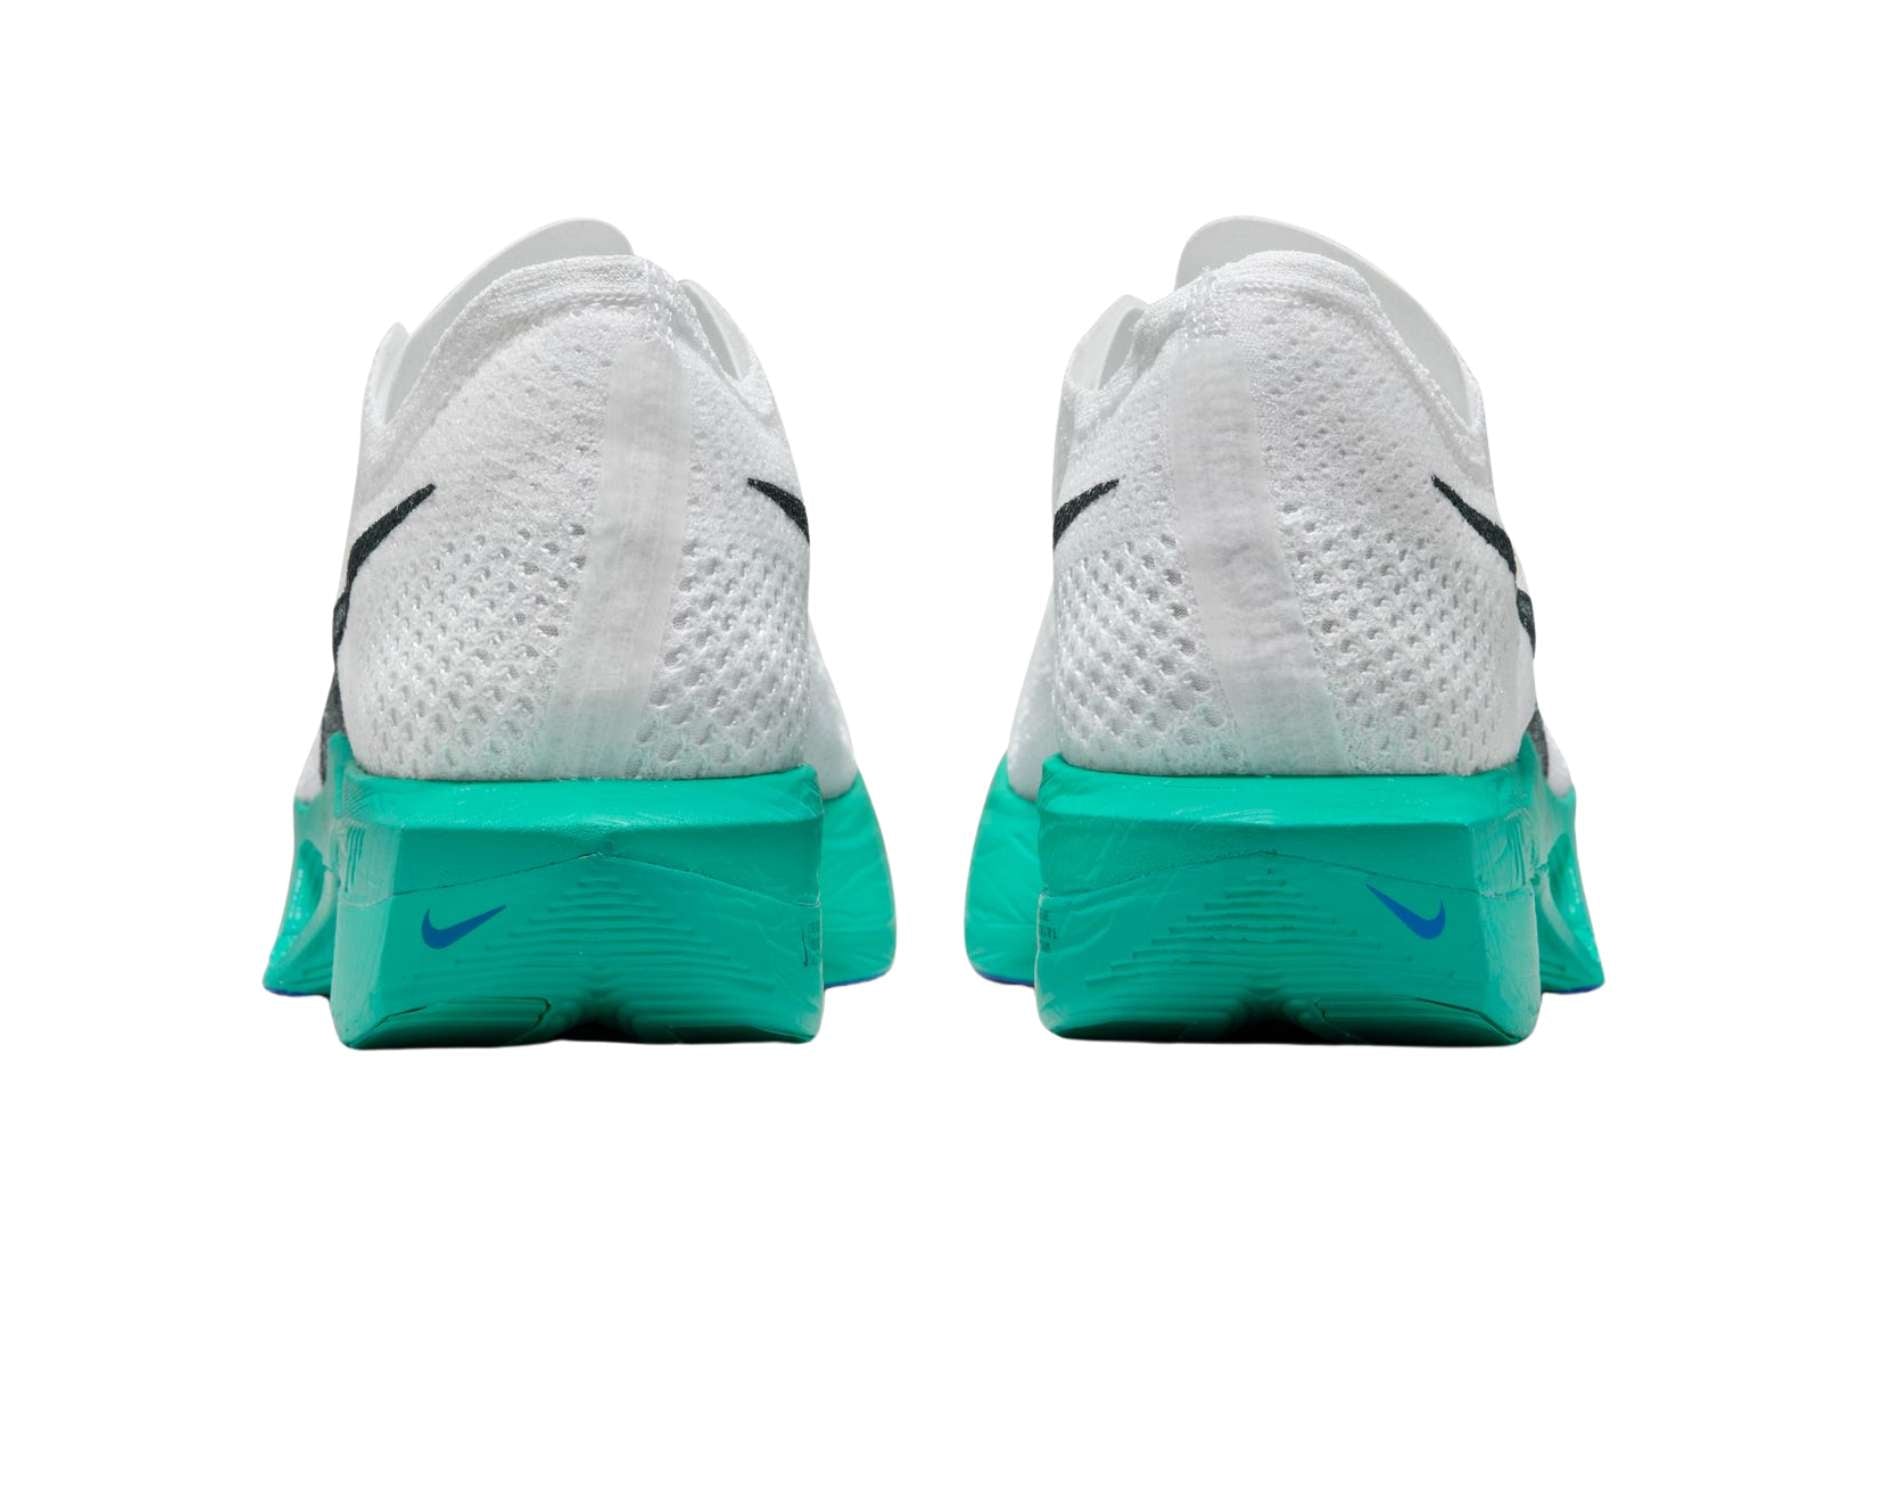 Nike Vaporfly 3 mens running shoe in standard width in white deep jungle jade ice clear jade colour